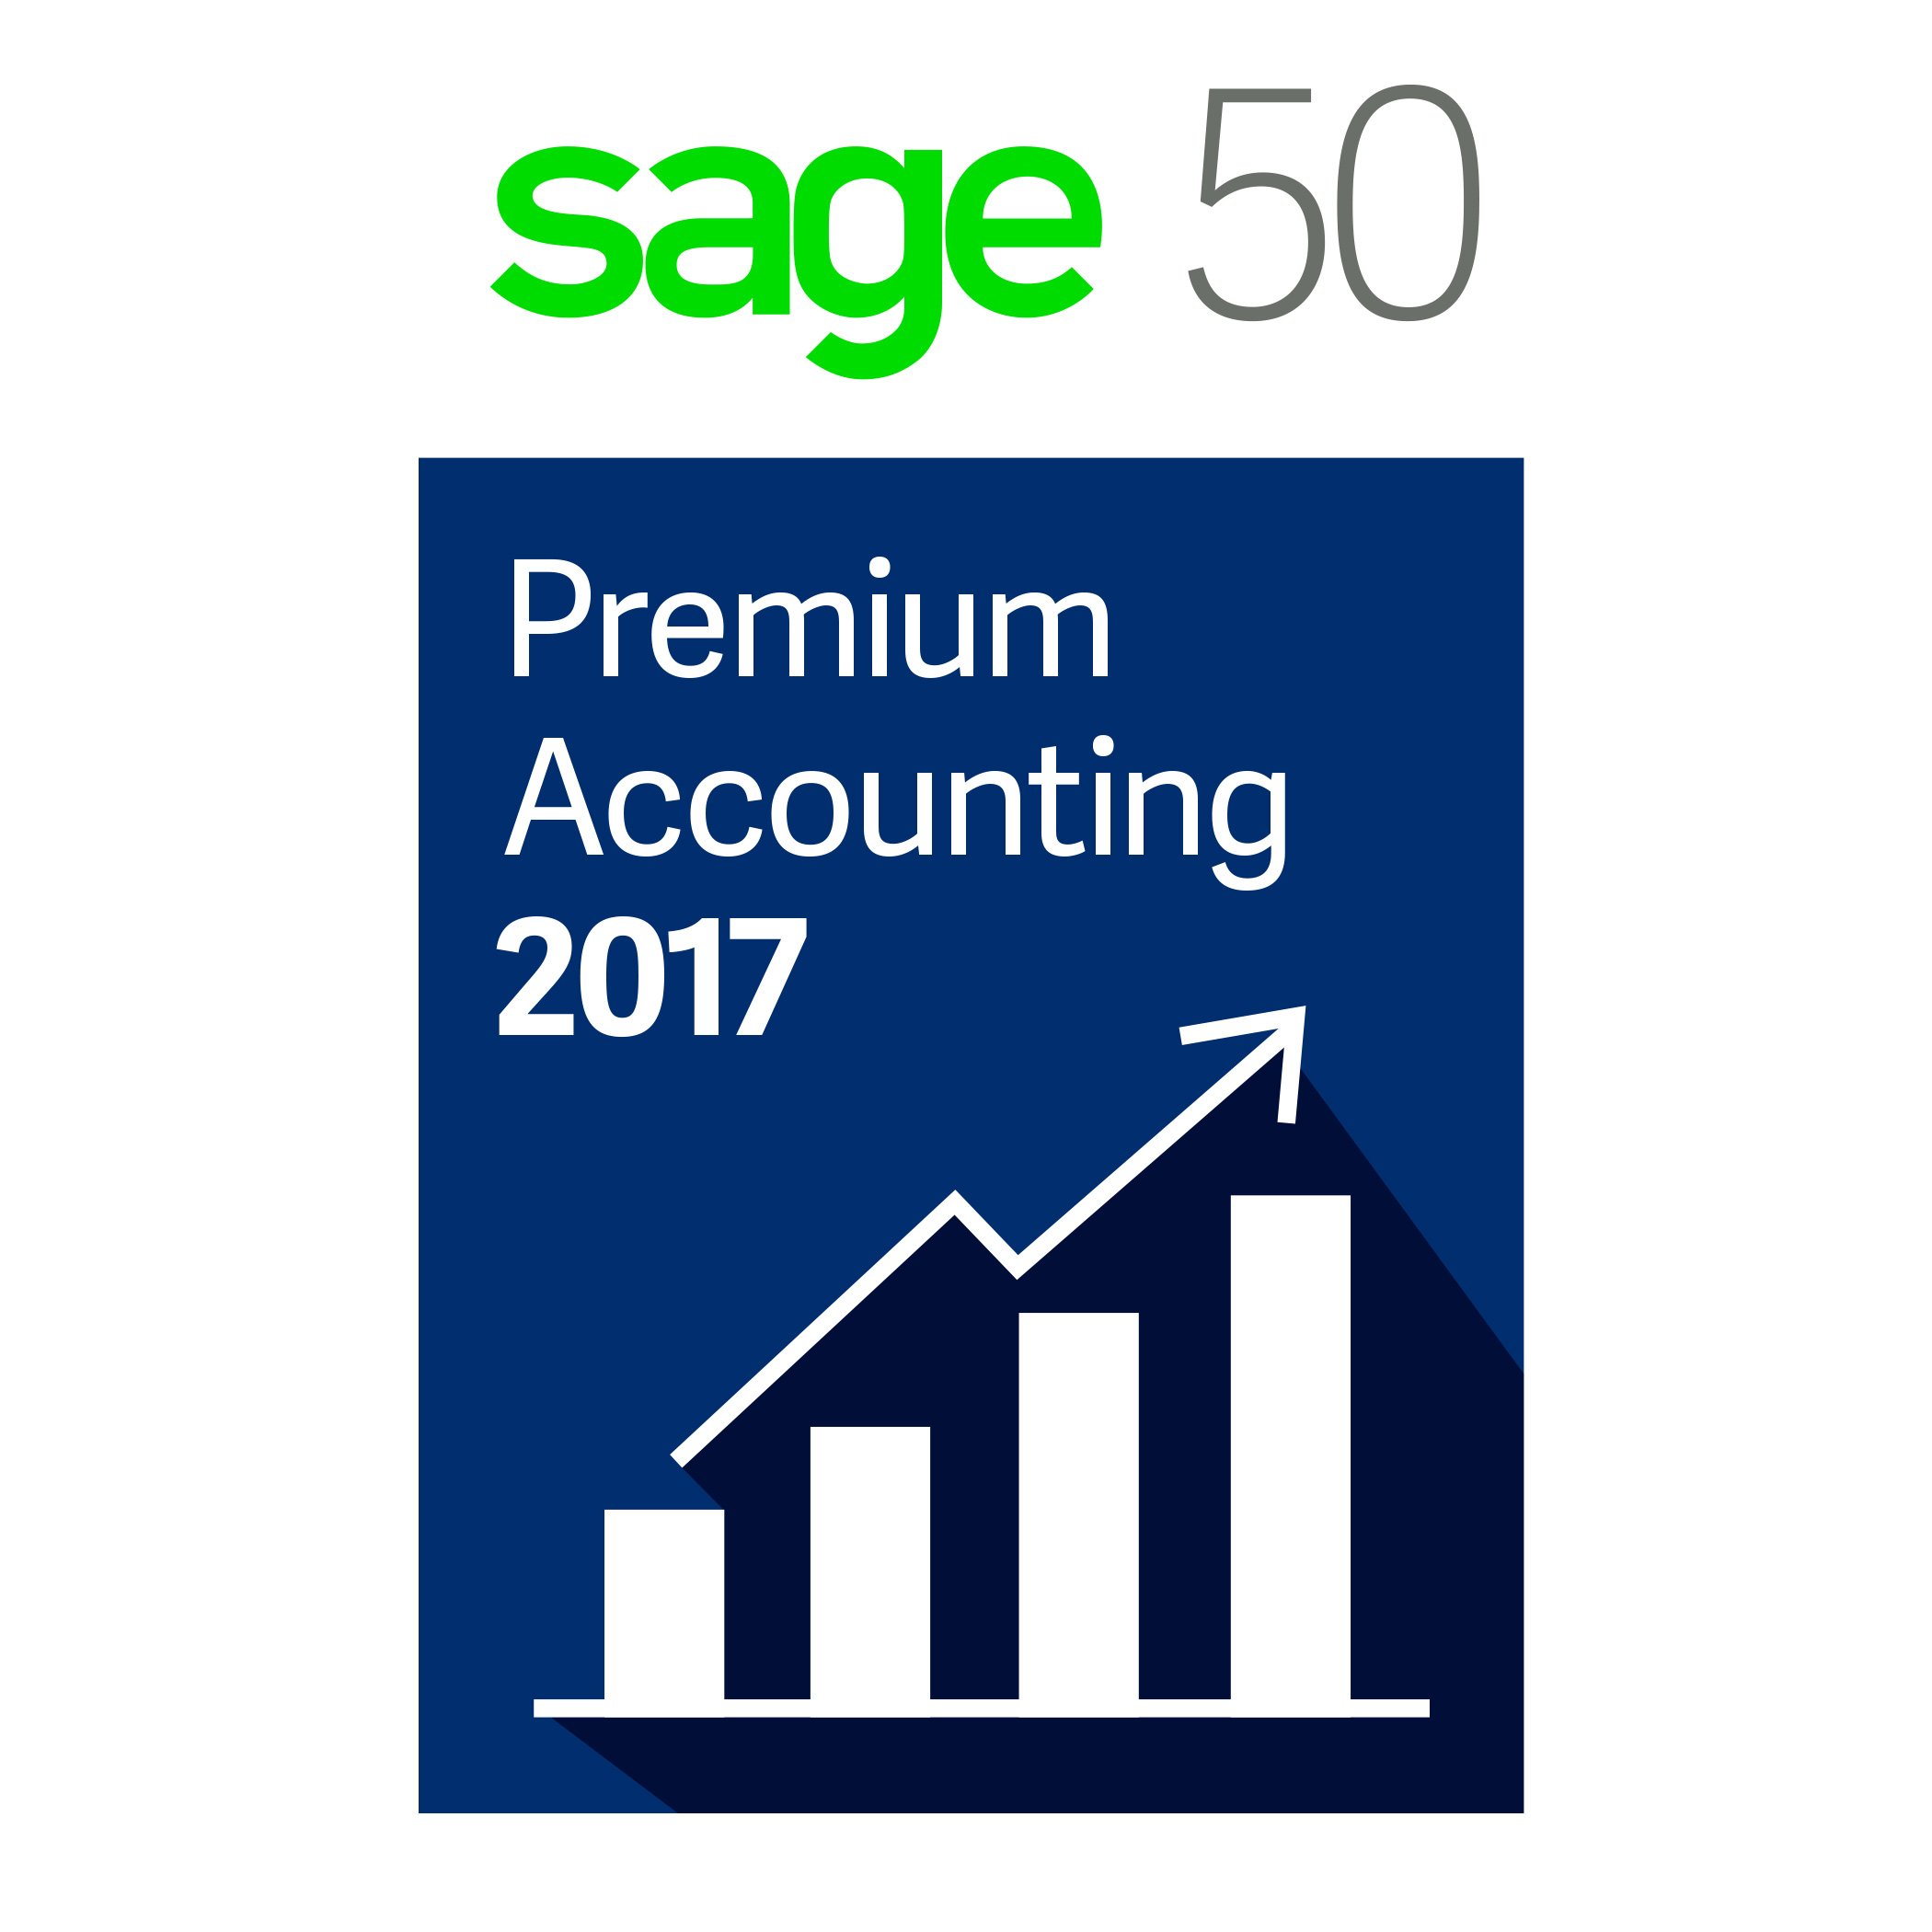 sage 50 accounts manual download